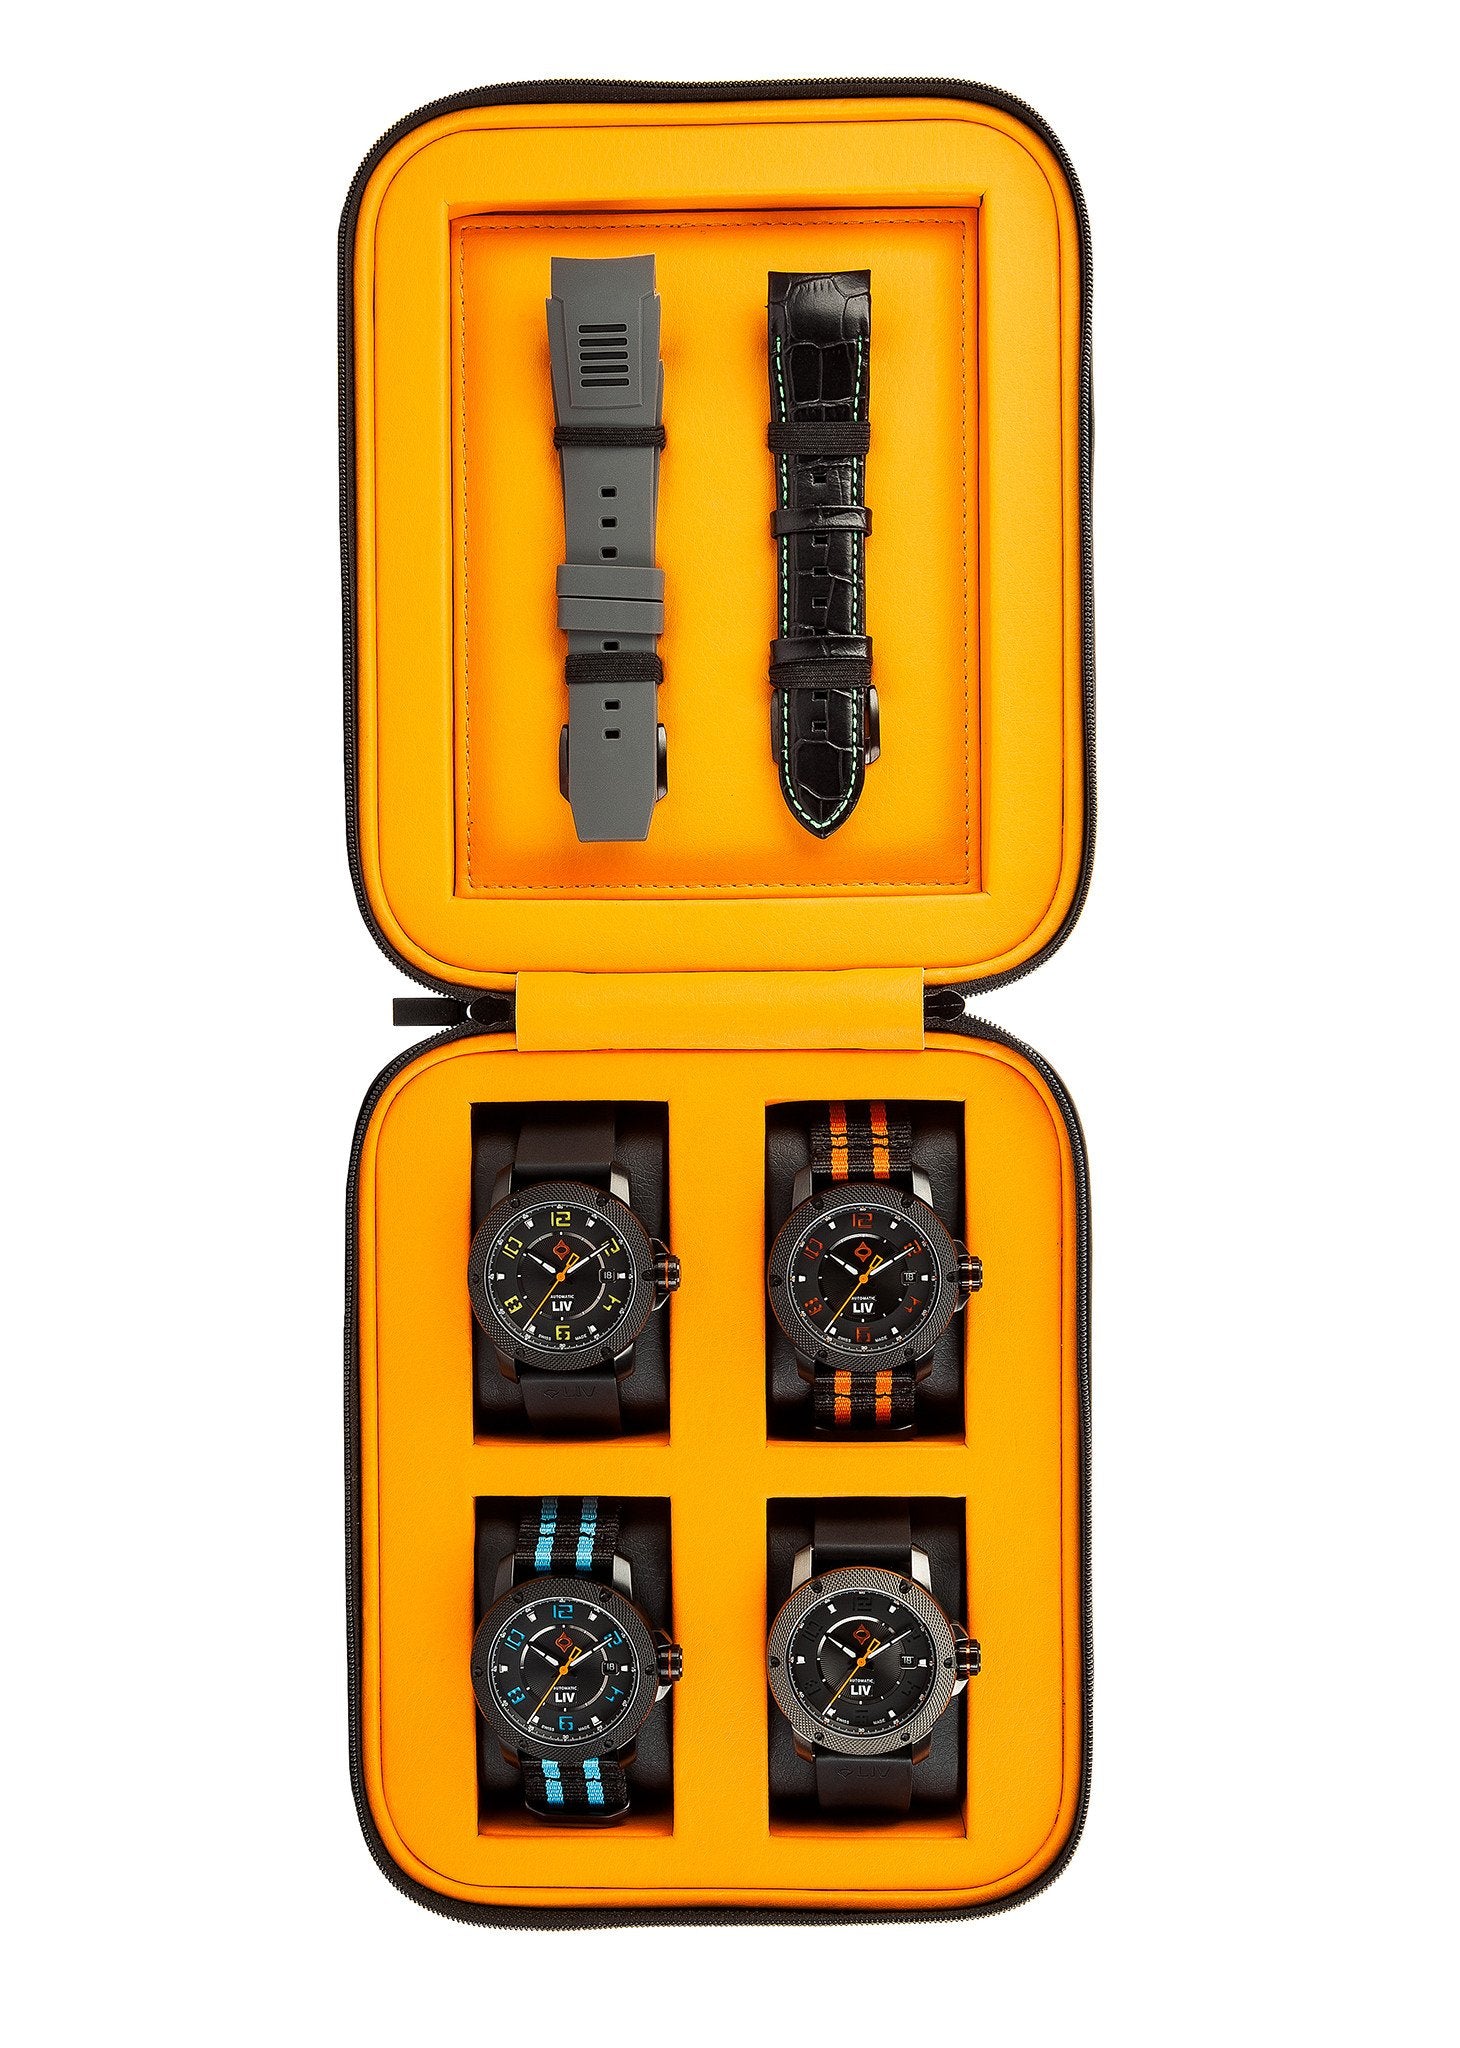 LIV Multi Watch & Strap Case - LIV Swiss Watches